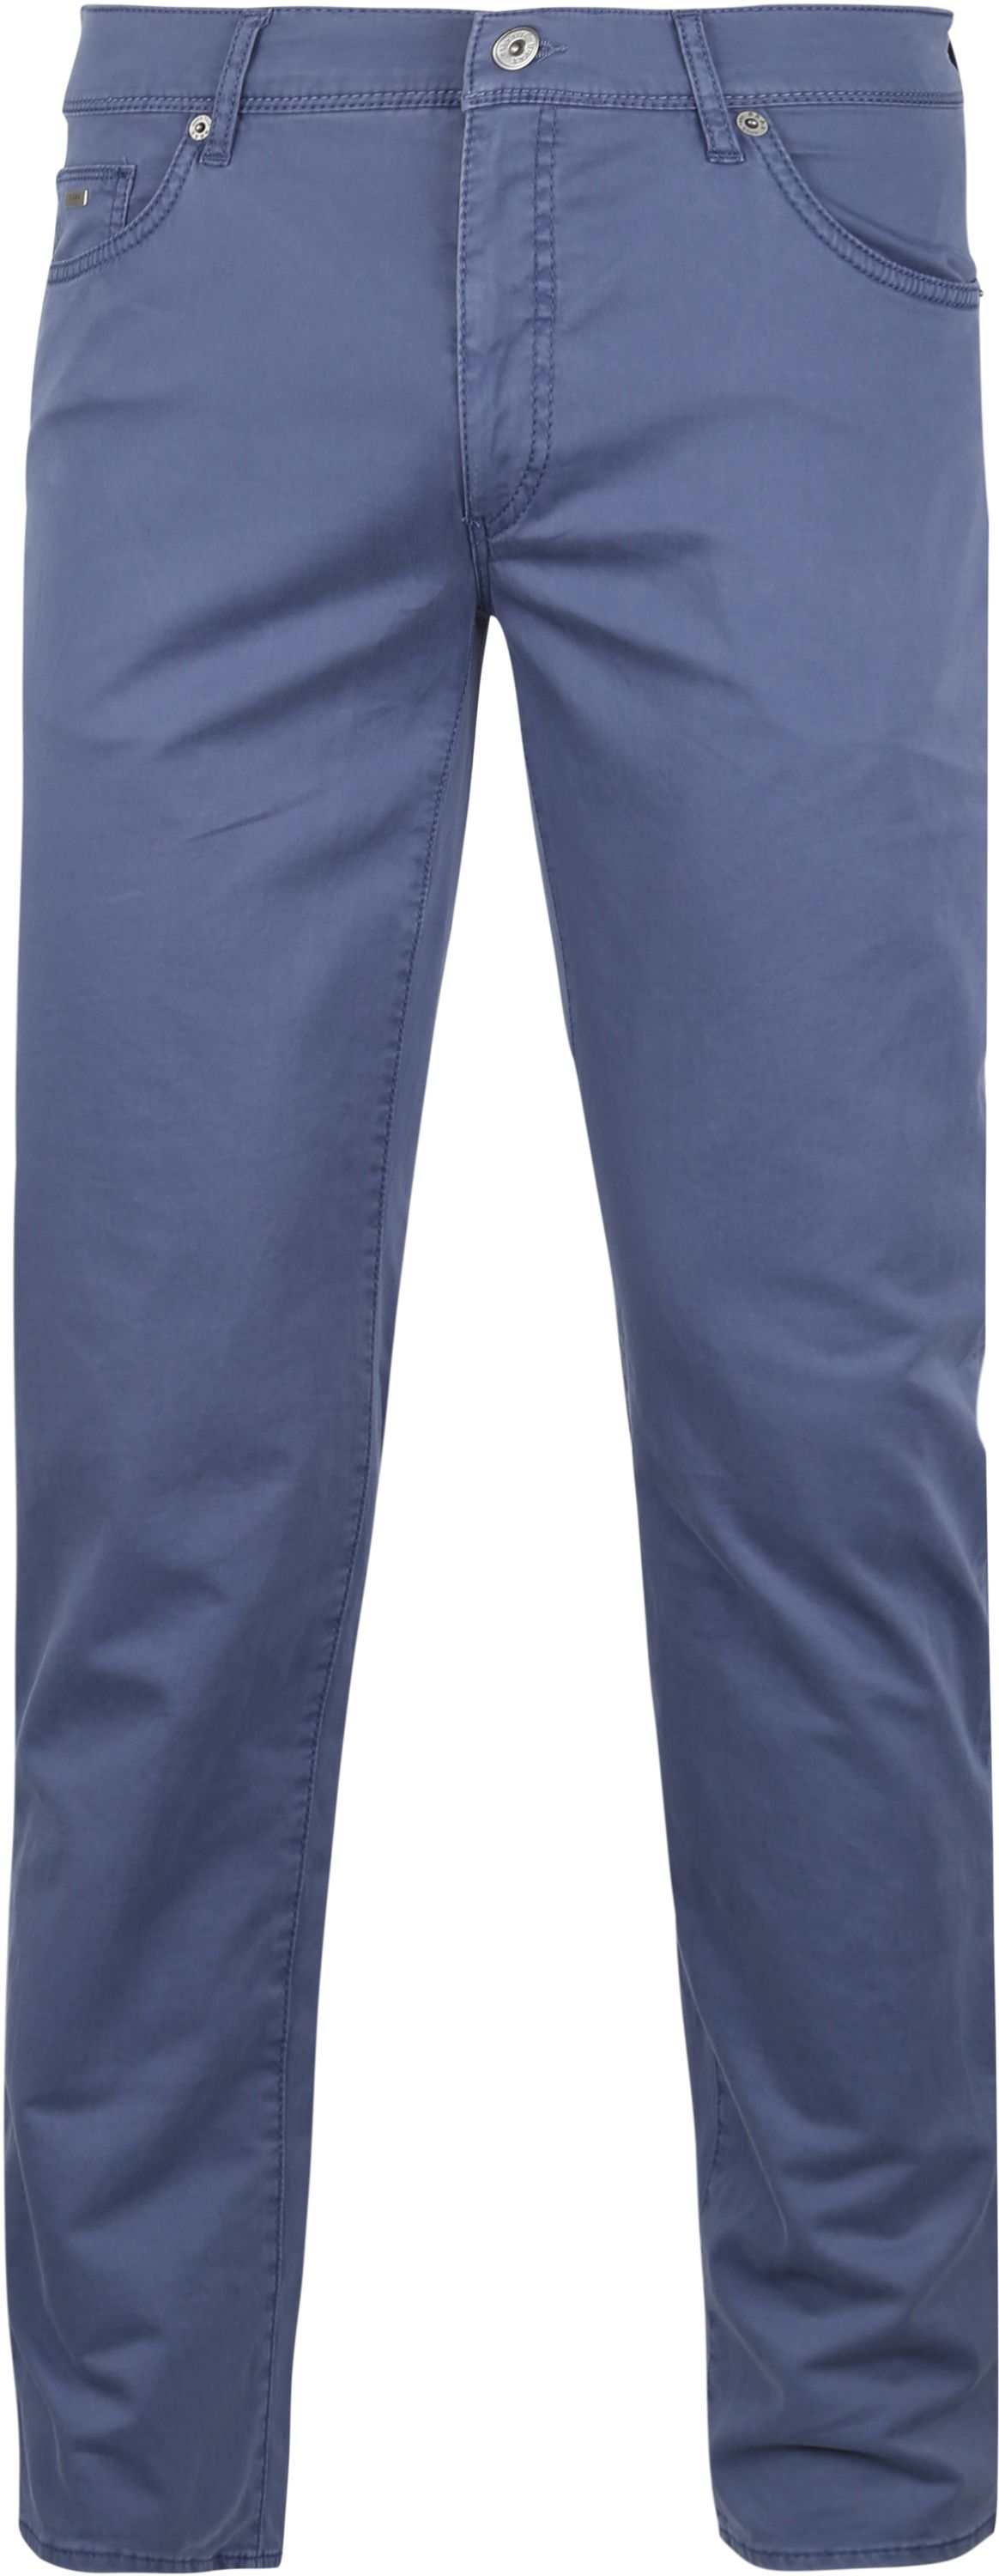 Pants Brax Cadiz Dark Blue Blue size W 33